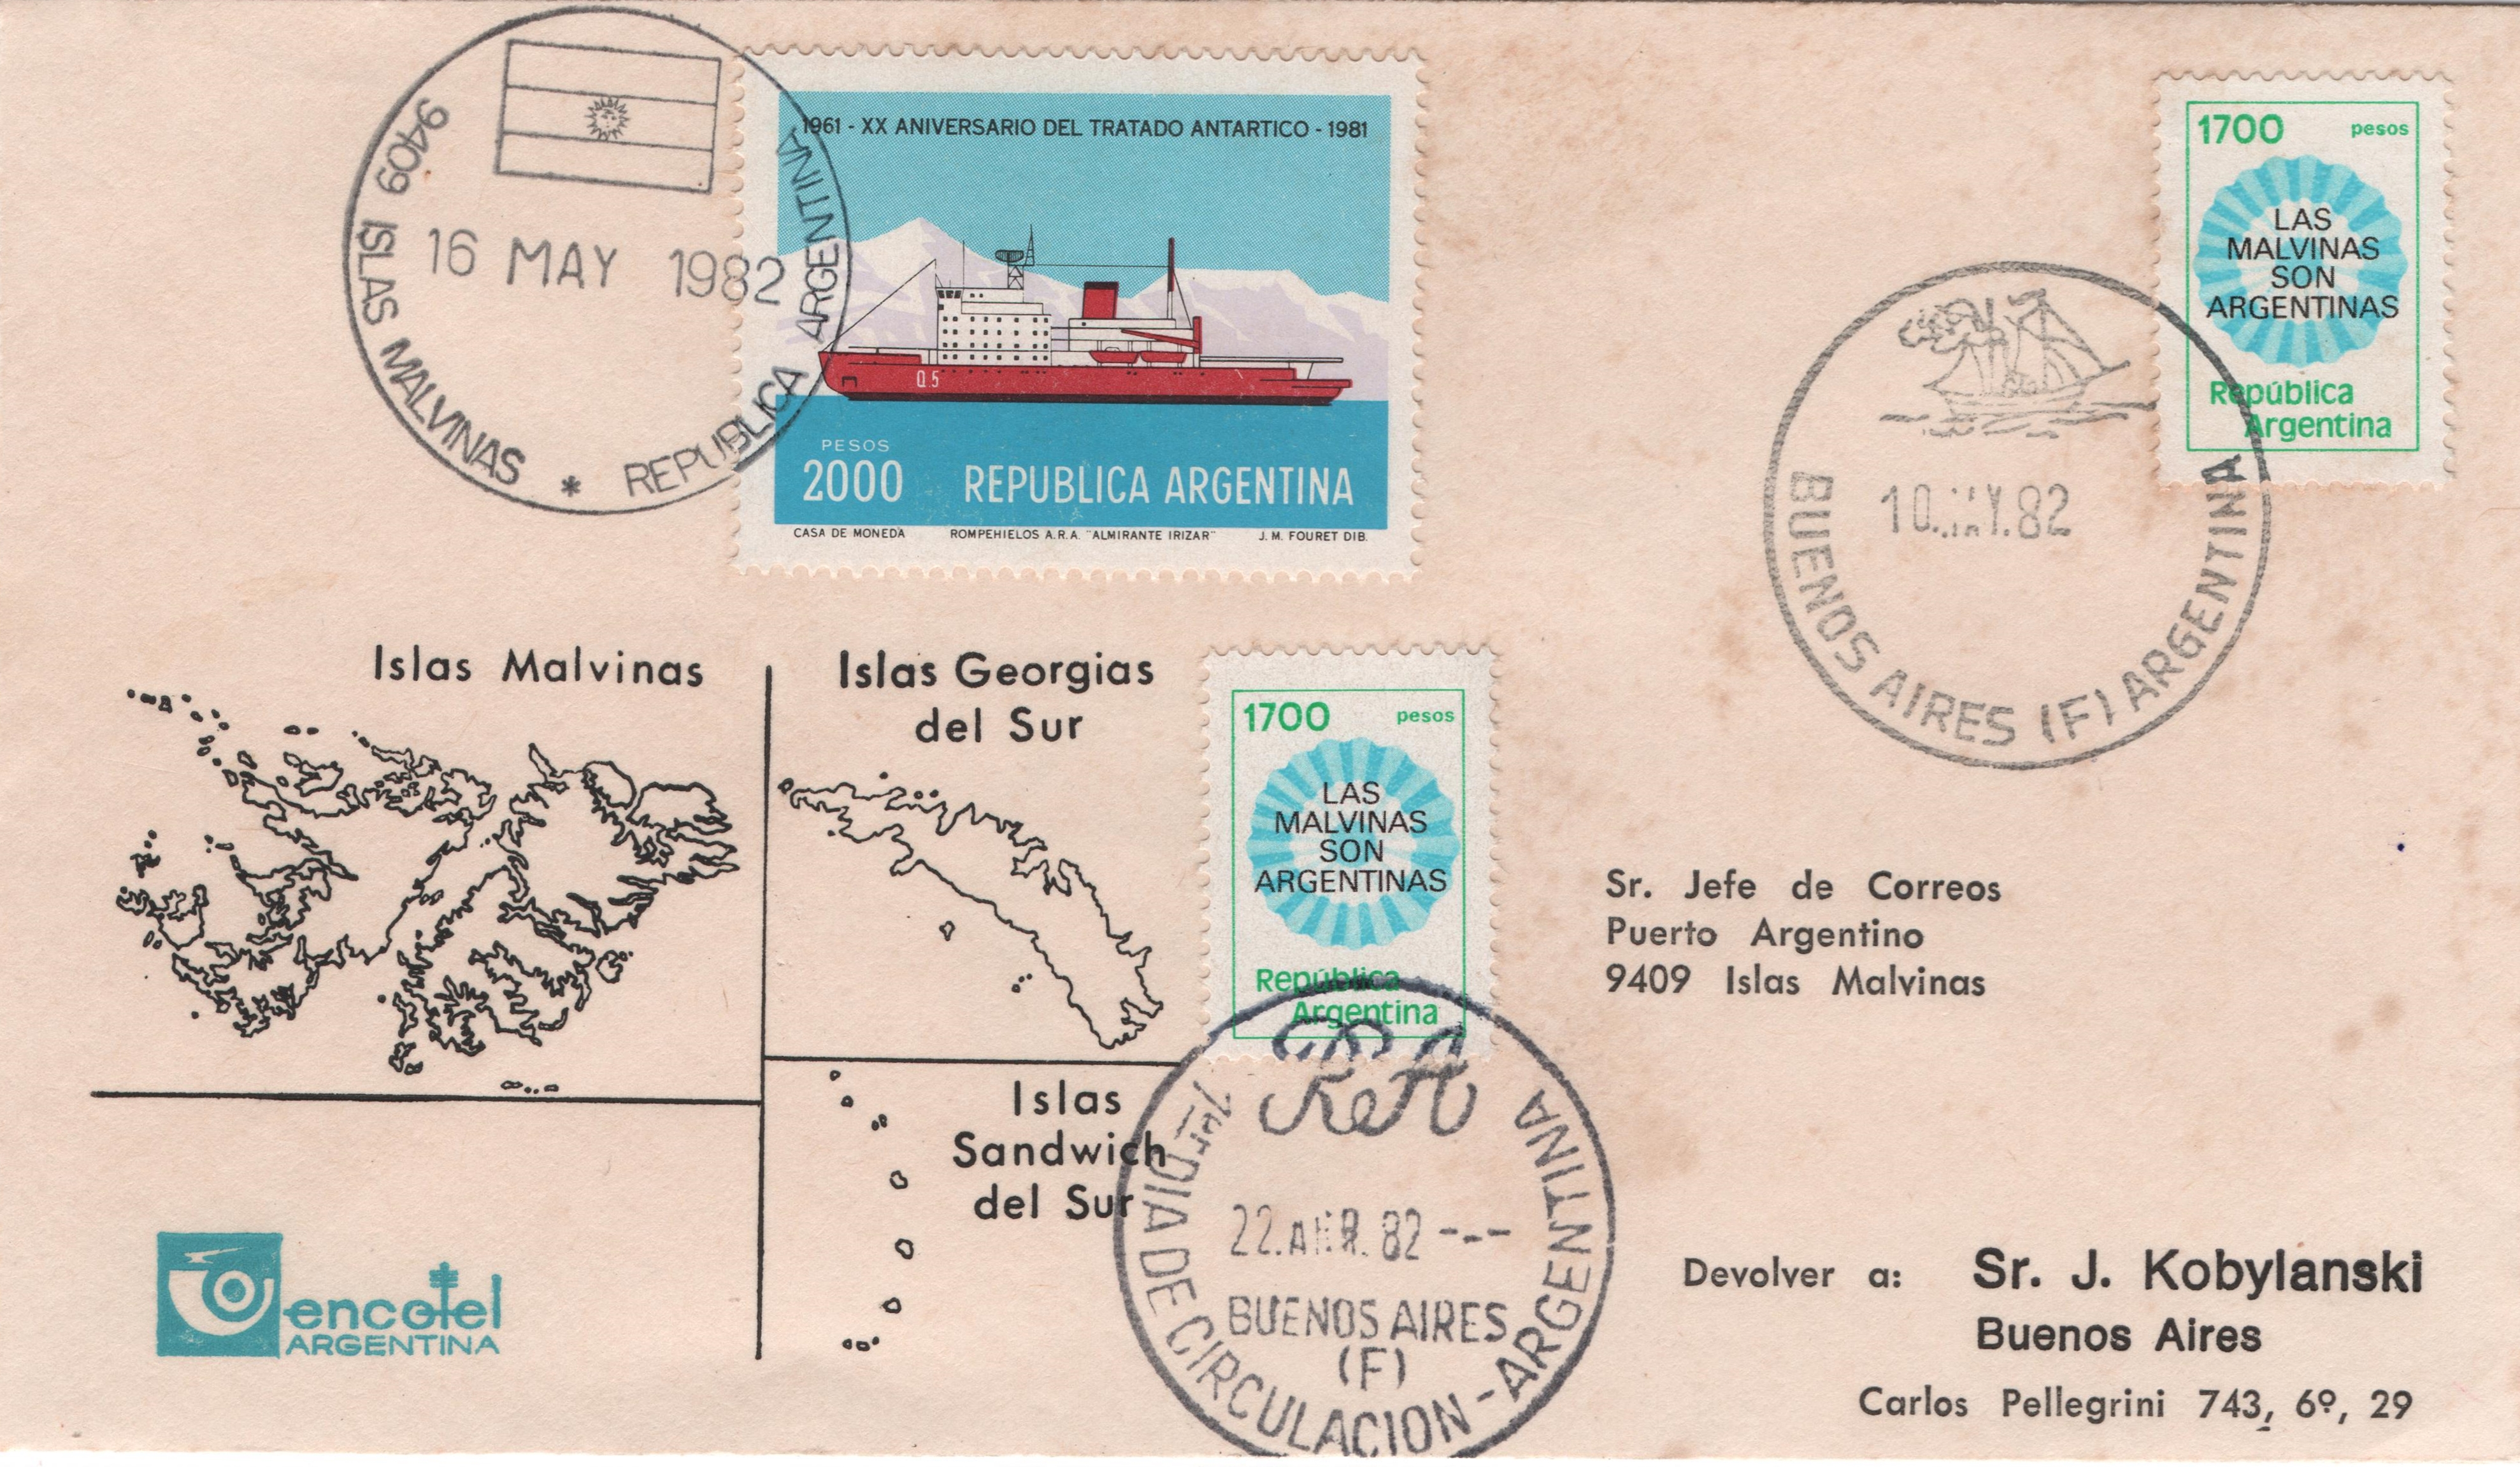 Twice-used philatelic cover bearing 2 copies of Scott #1338 plus 1981 stamp commemorating an Antarctic treaty (Scott #